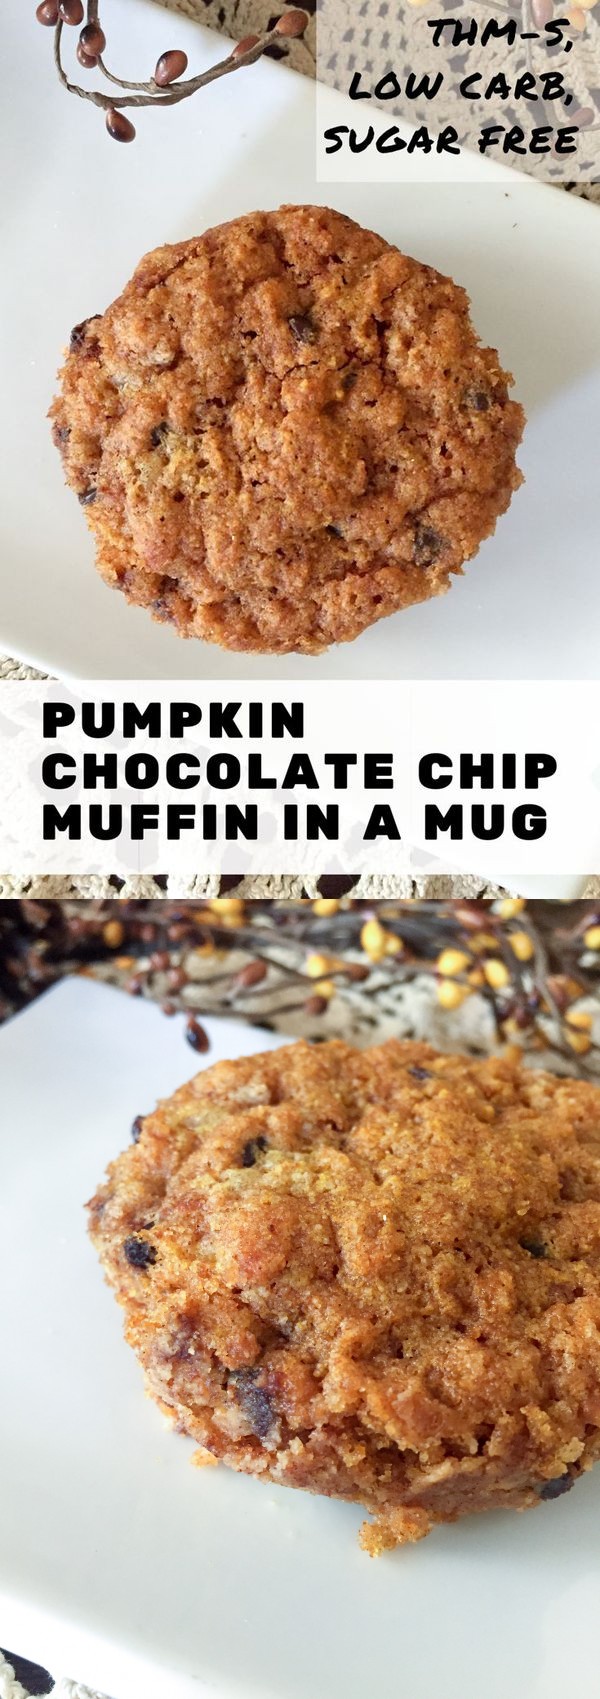 Pumpkin Chocolate Chip Muffin in a Mug (THM-S, Low Carb, Sugar Free